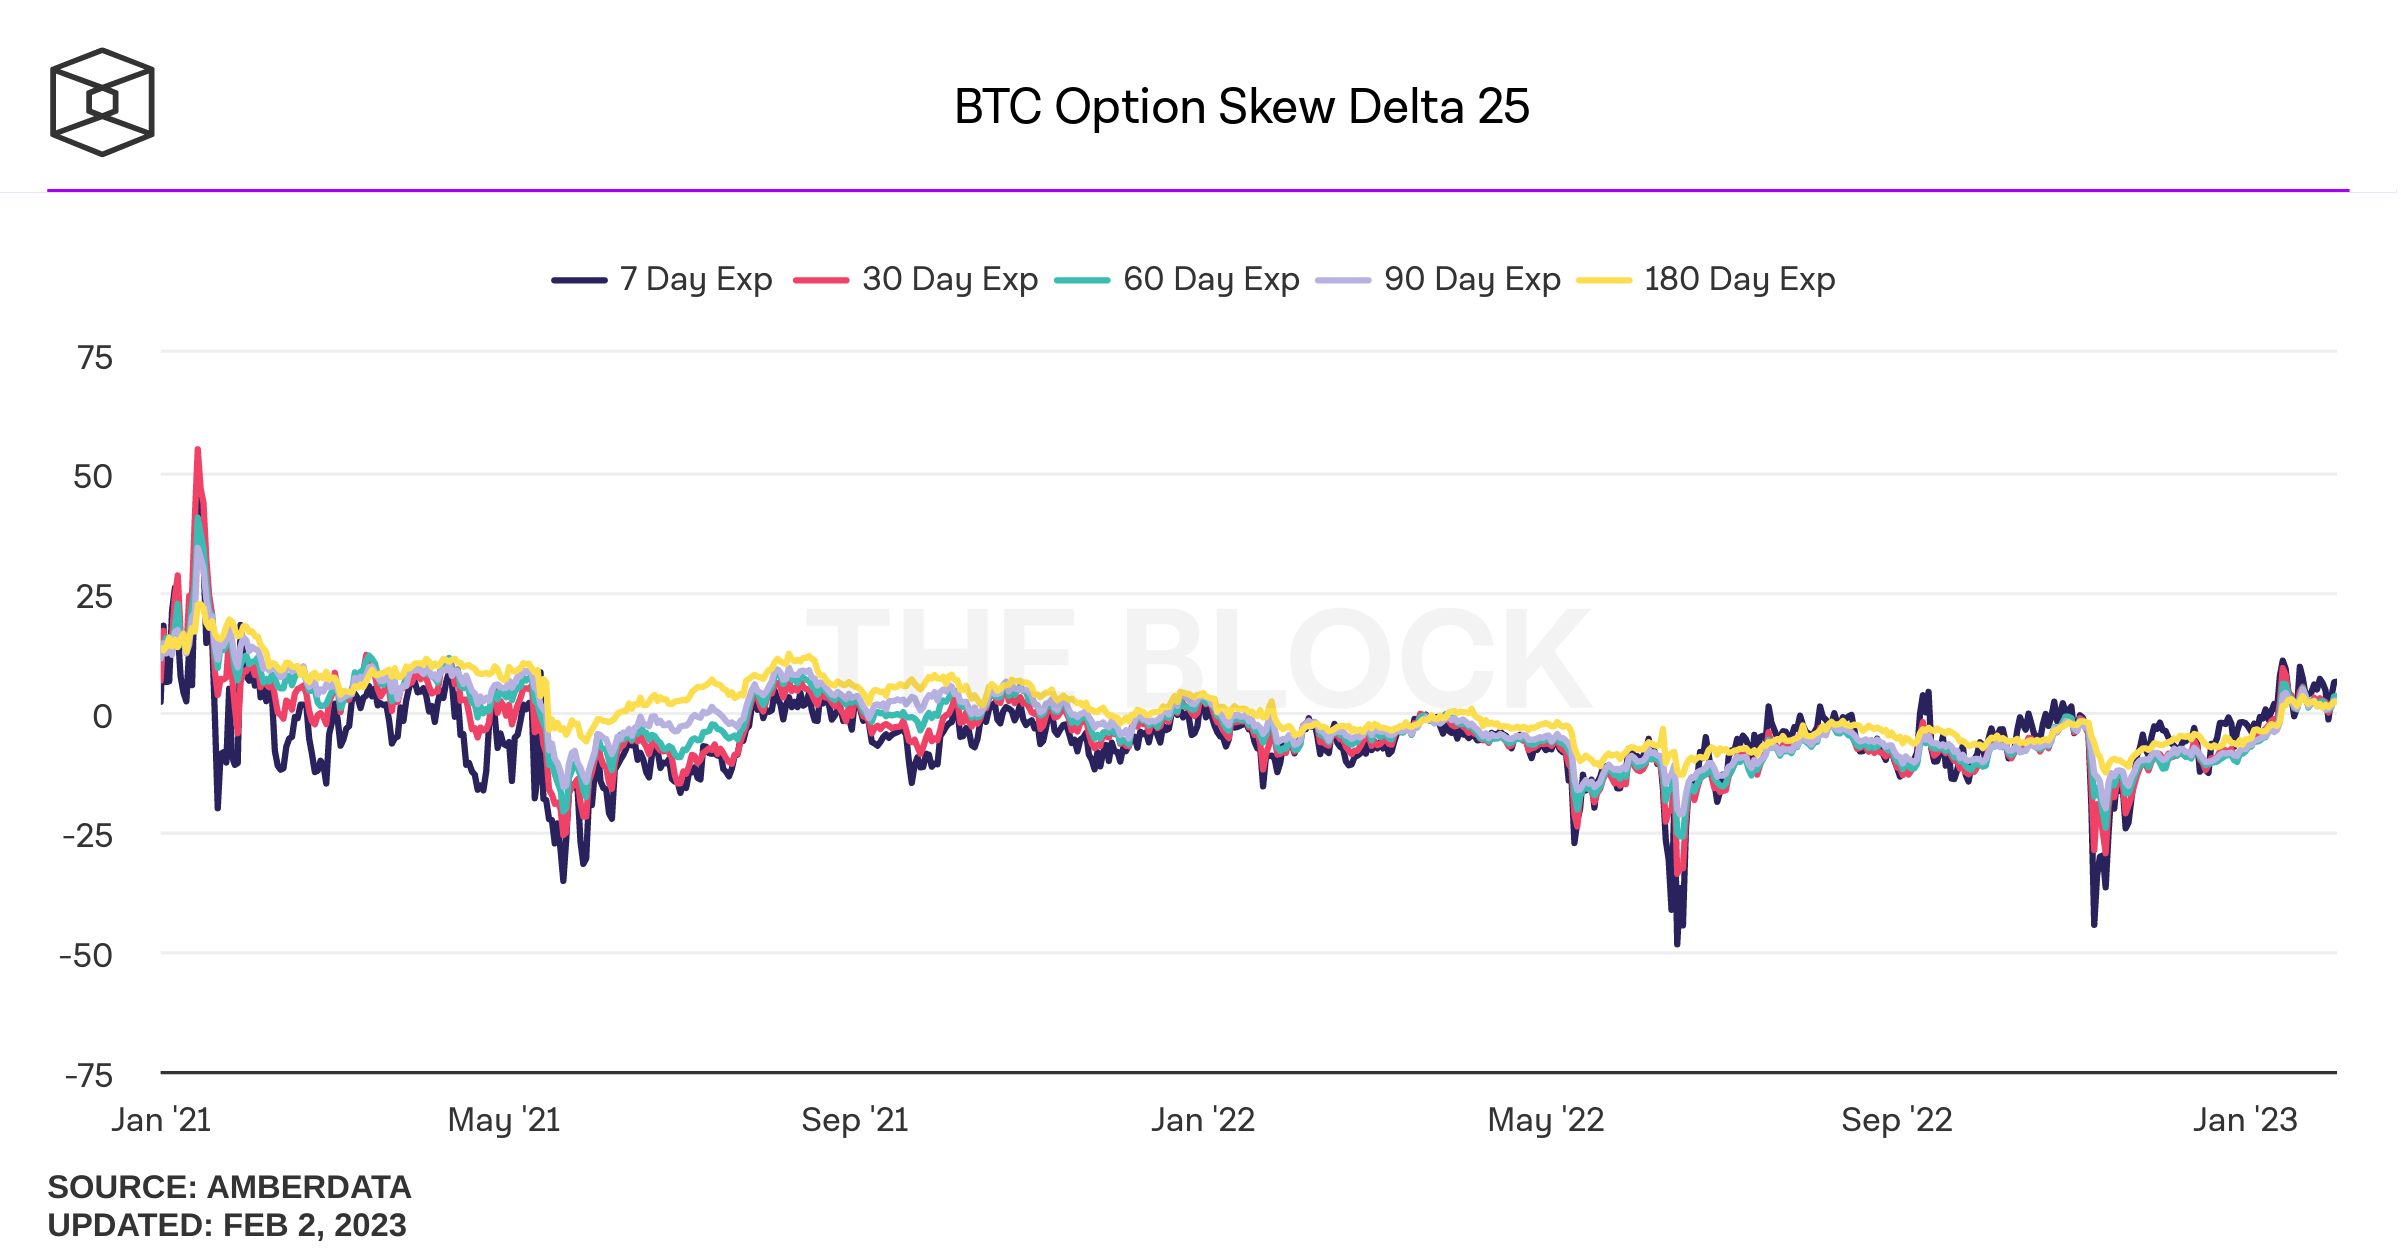 25% BTC Option Skew Delta